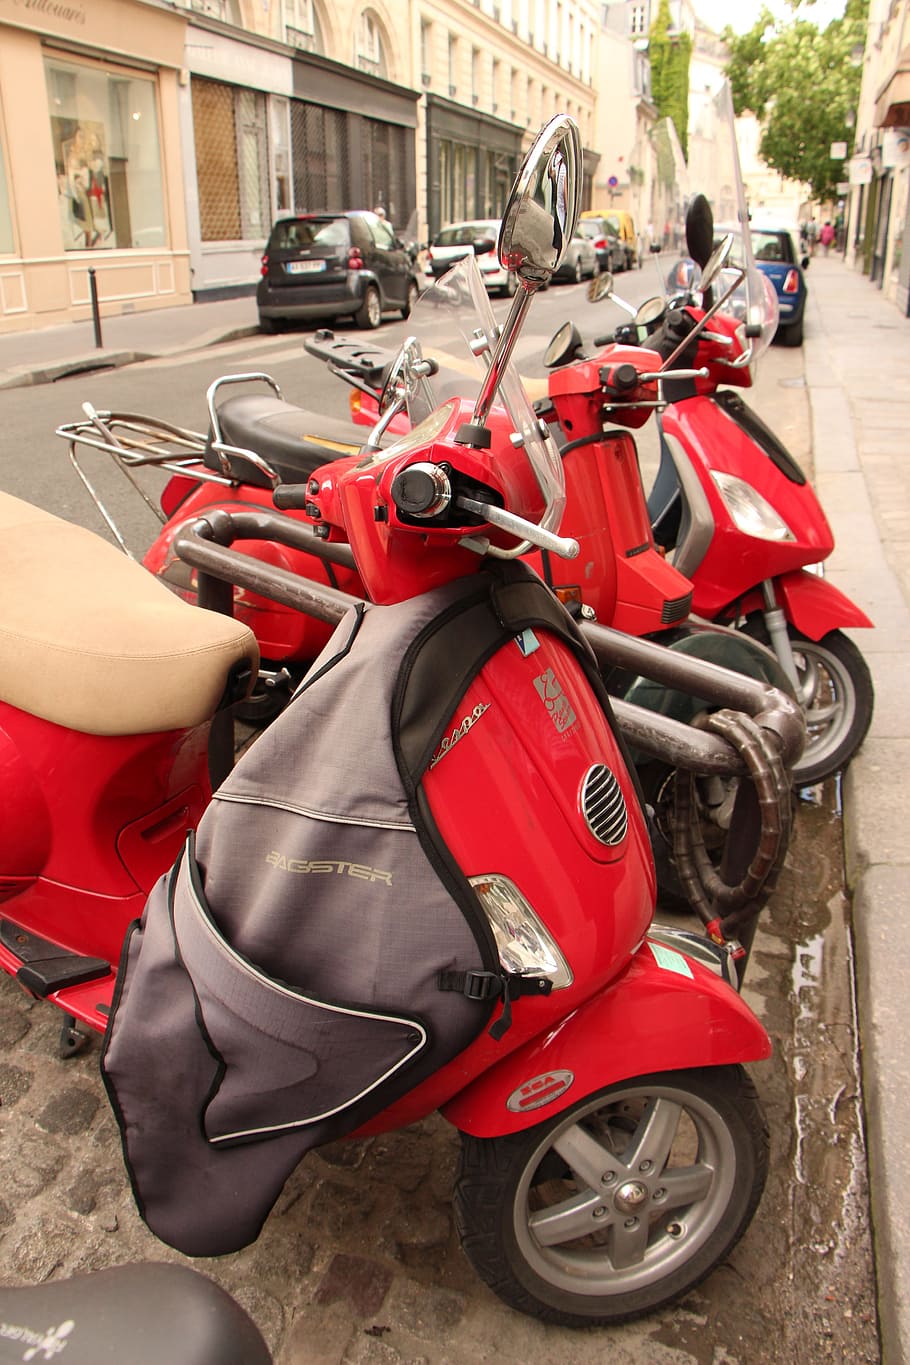 Vespa, Scooter, Street, Paris, vespa, scooter, motorcycle, vehicle, motorbike, transportation, moped